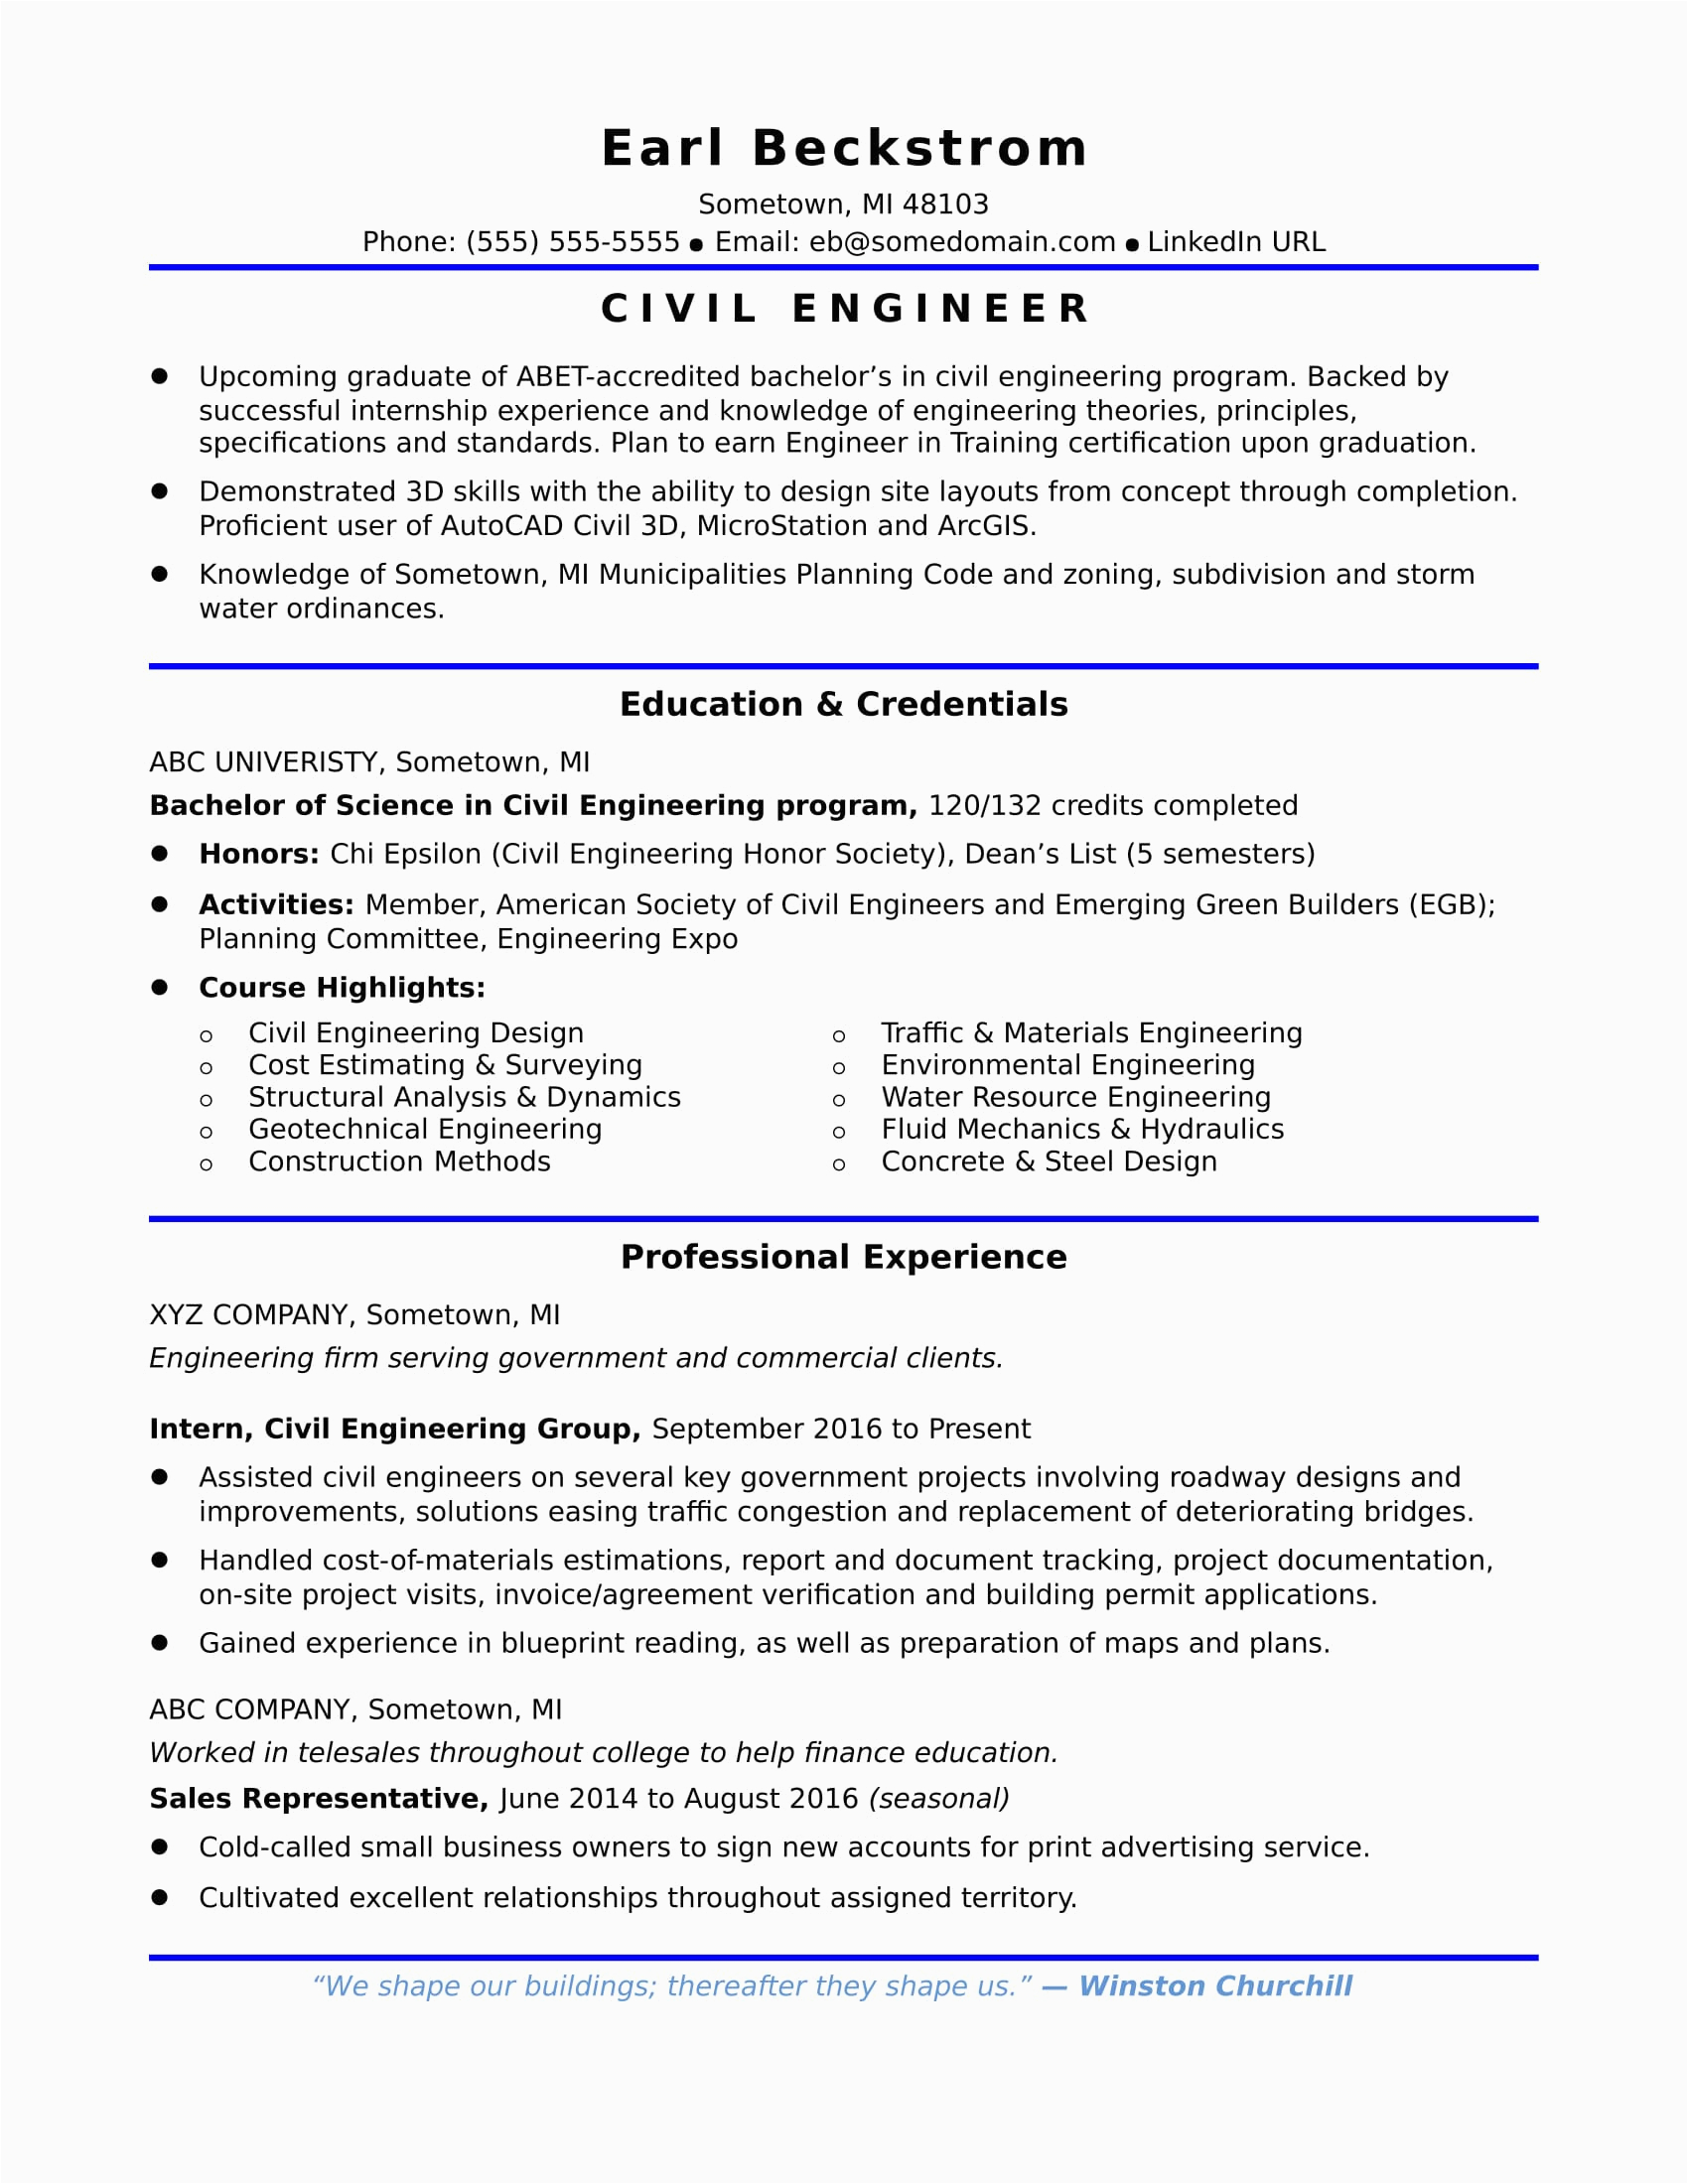 Entry Level Civil Engineer Resume Sample Sample Resume for An Entry Level Civil Engineer